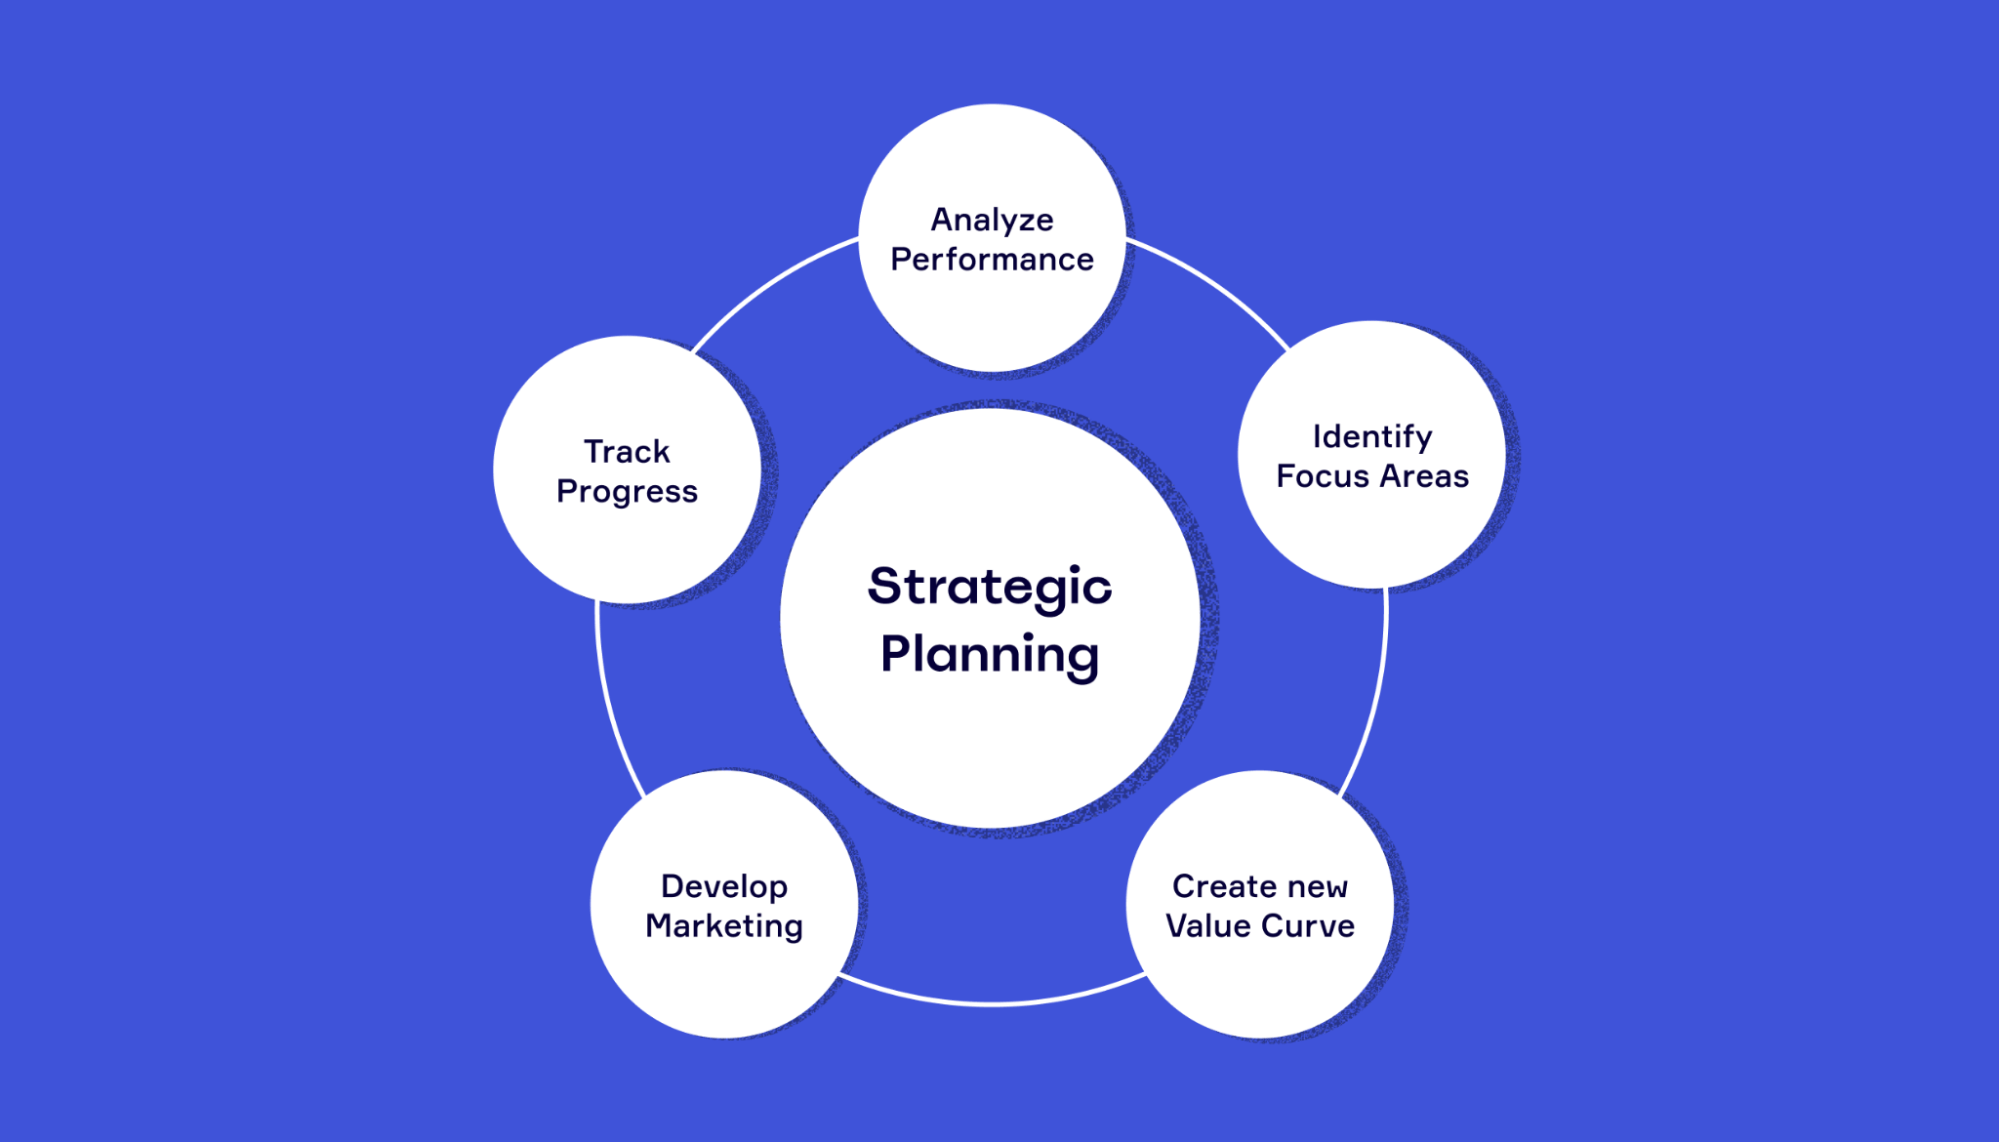 Visual representation of the strategic planning process